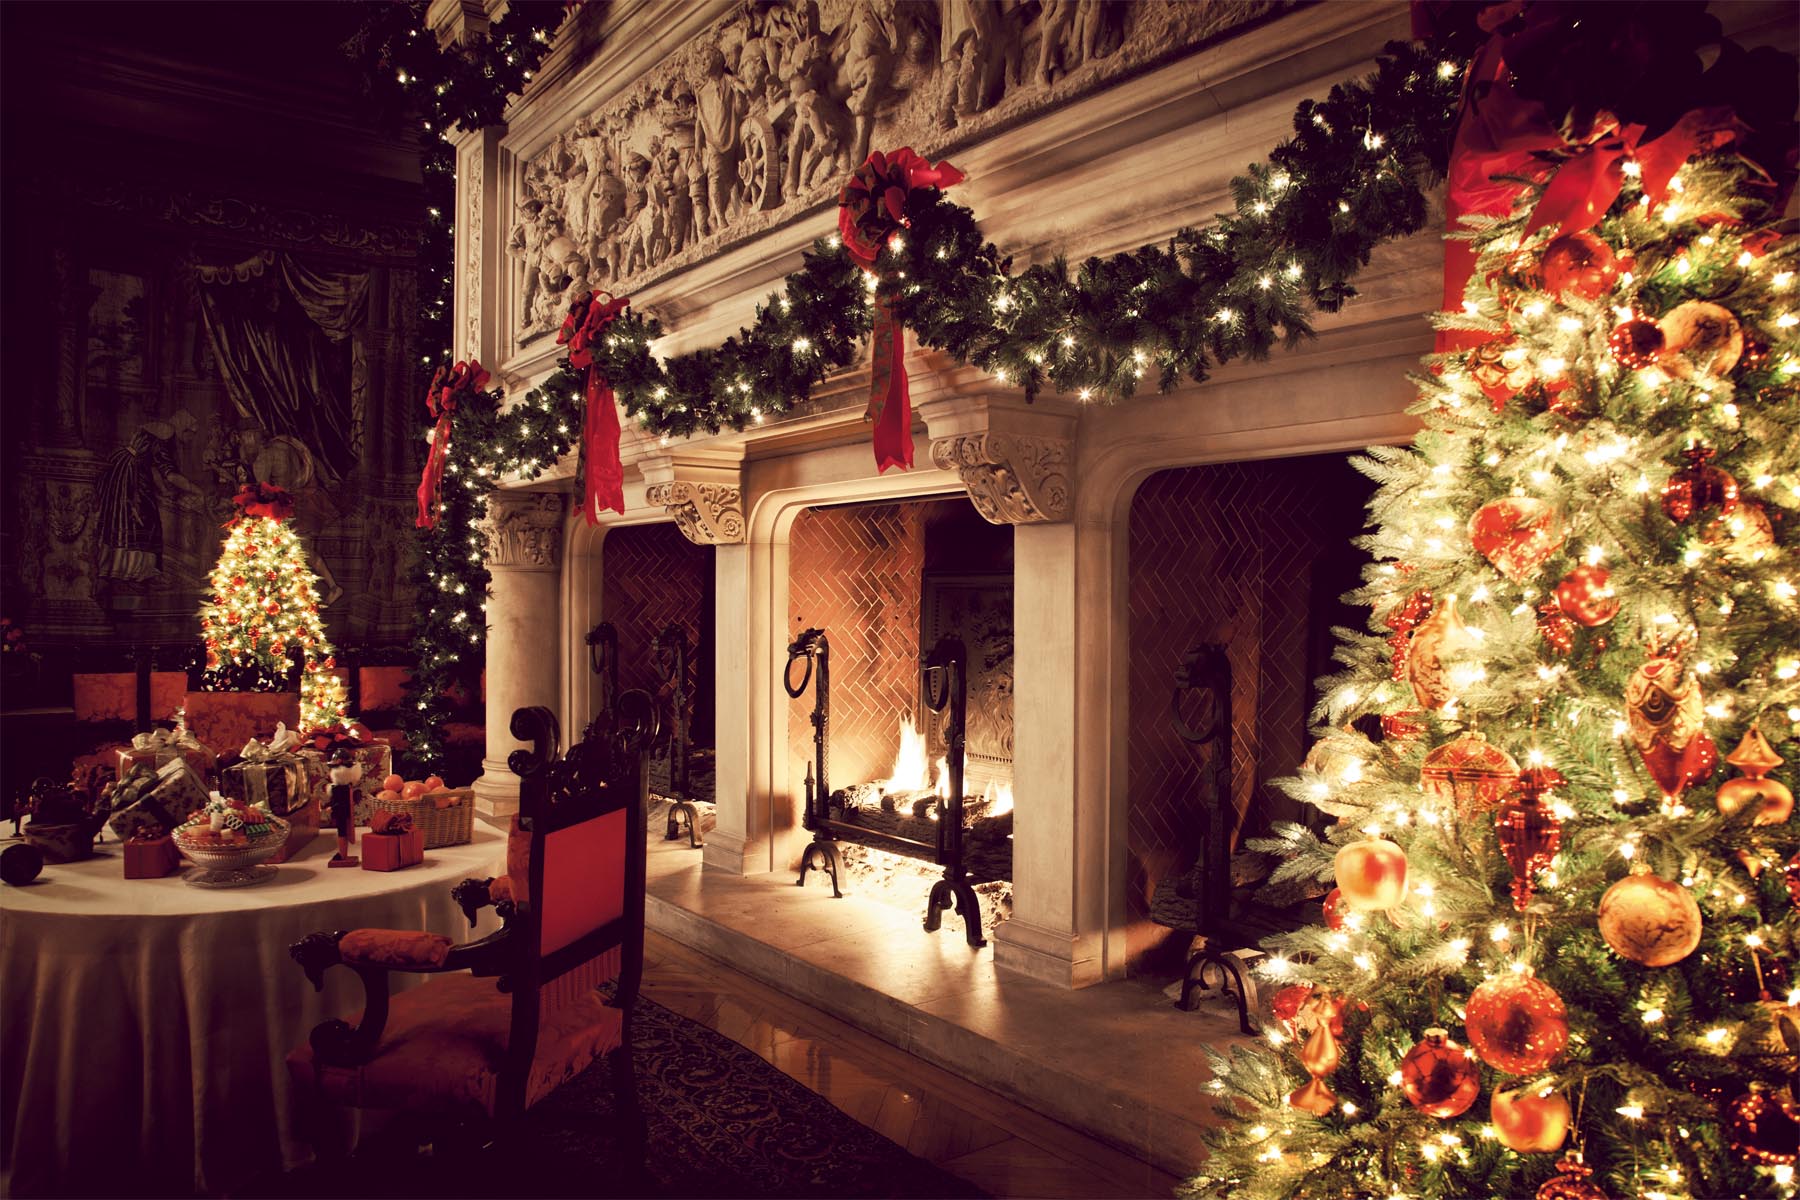 Biltmore Fireplace At Christmas Skimbaco Lifestyle Online Magazine